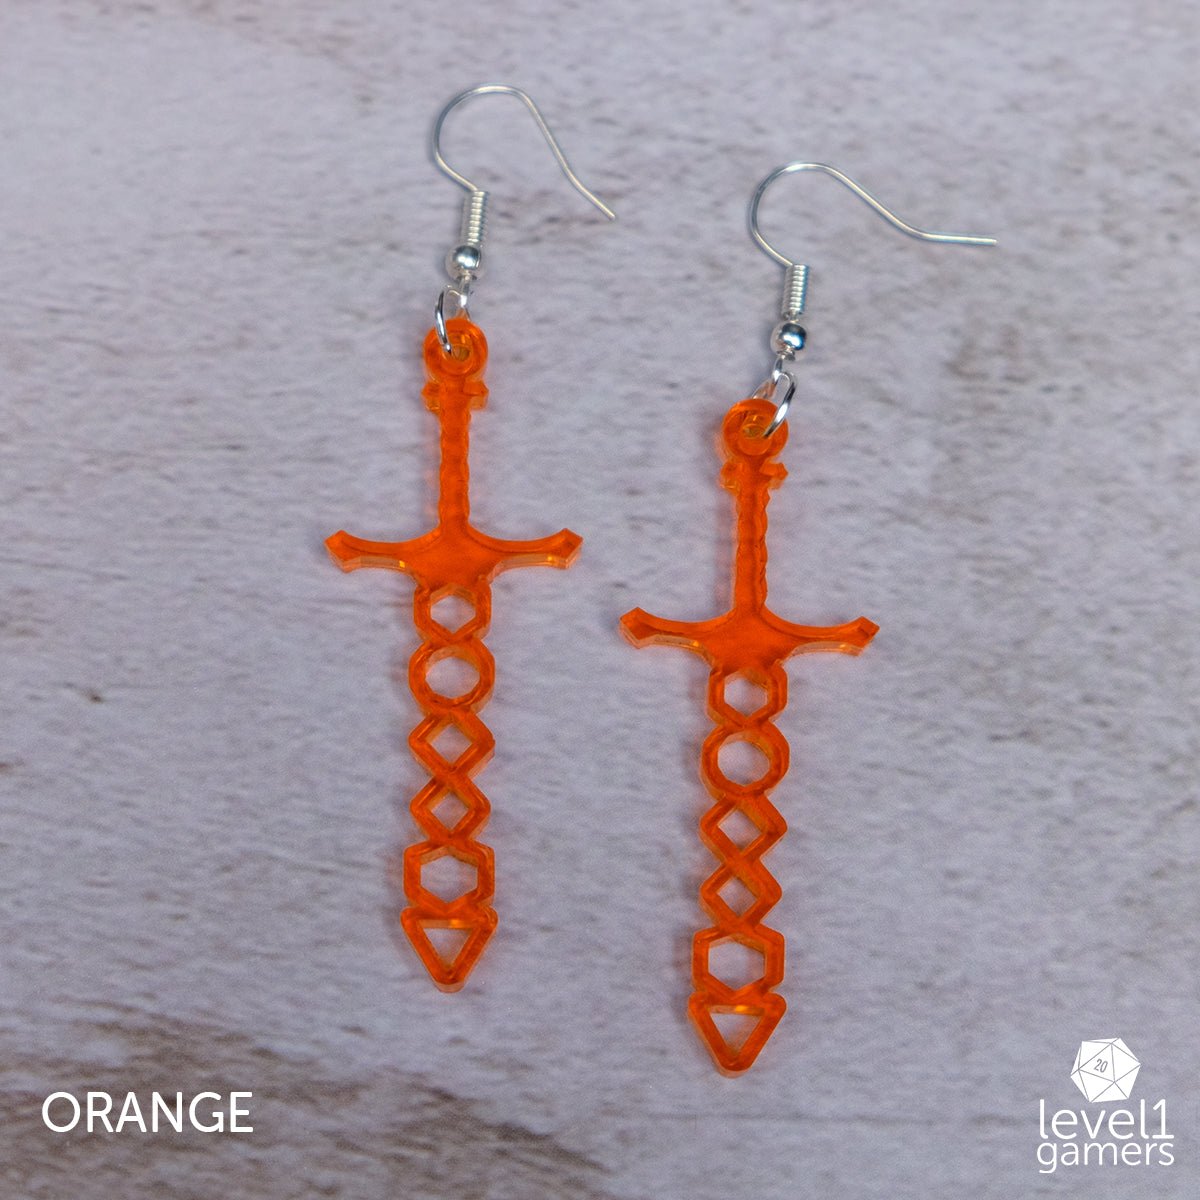 Dice Sword Acrylic Earrings  Level 1 Gamers Pendant Orange 